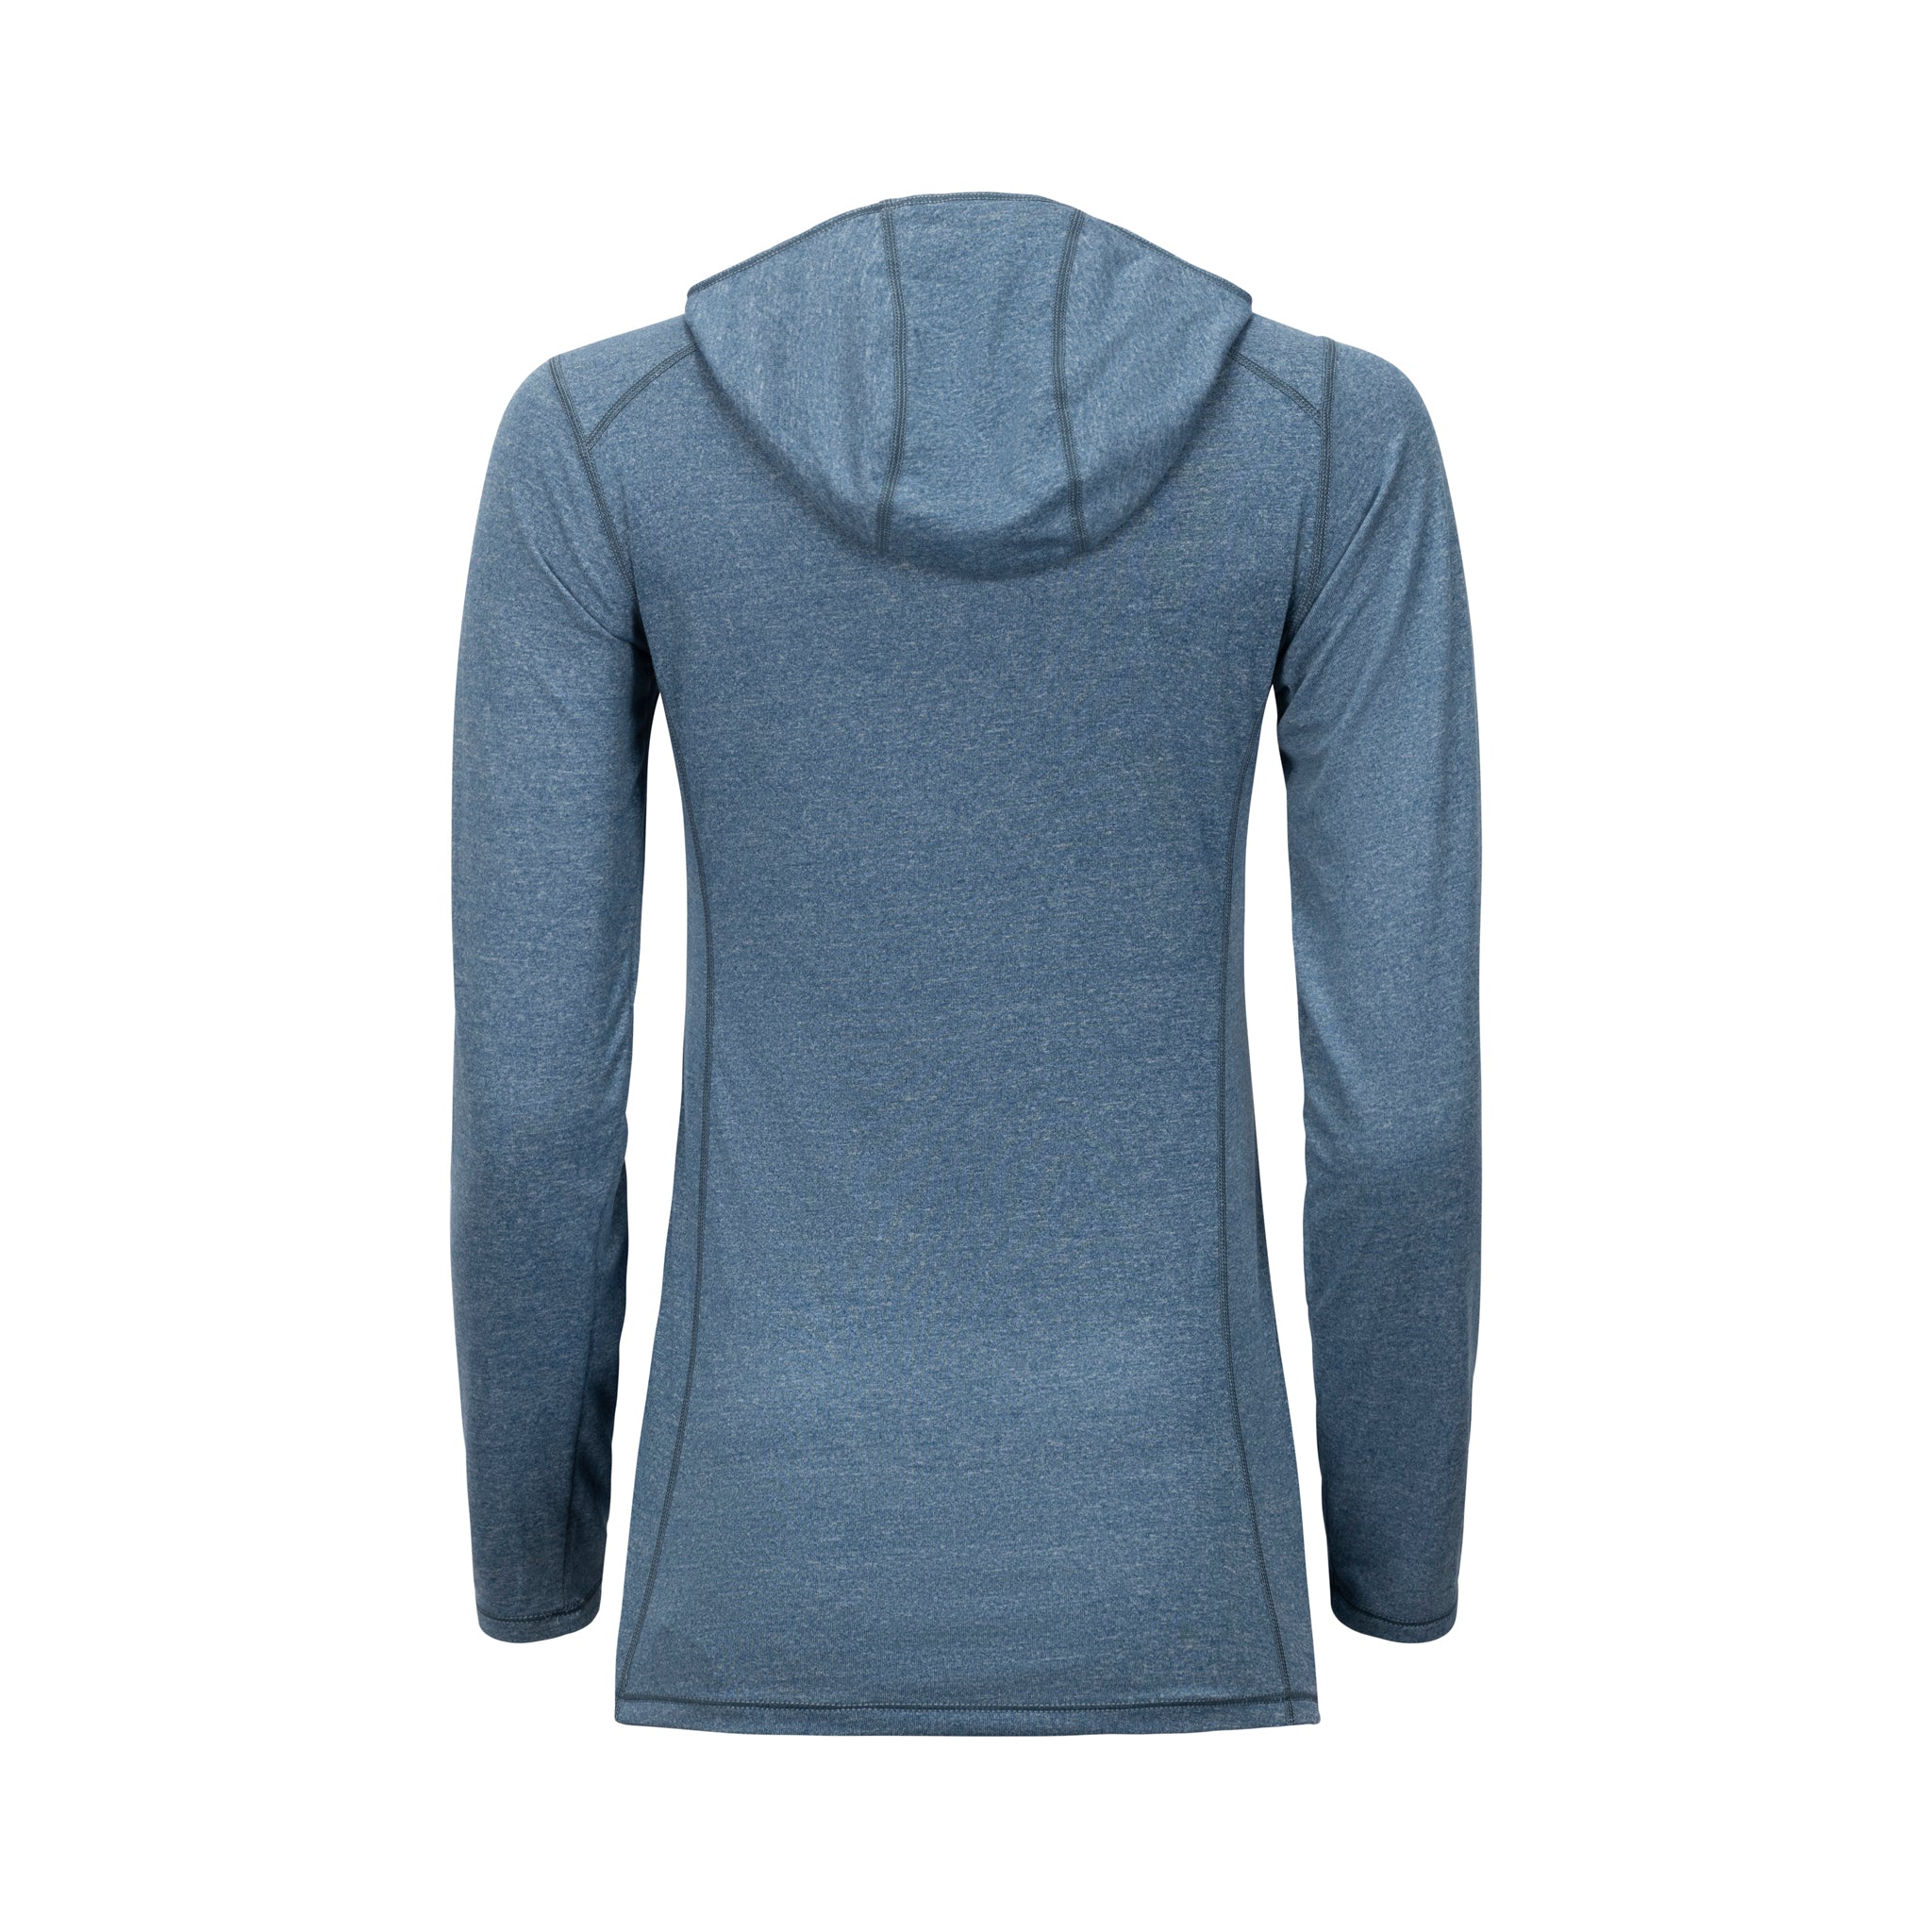 sync-performance-women's-deluge-1/2-zip-hooded-long-sleeve-stellar-blue-back